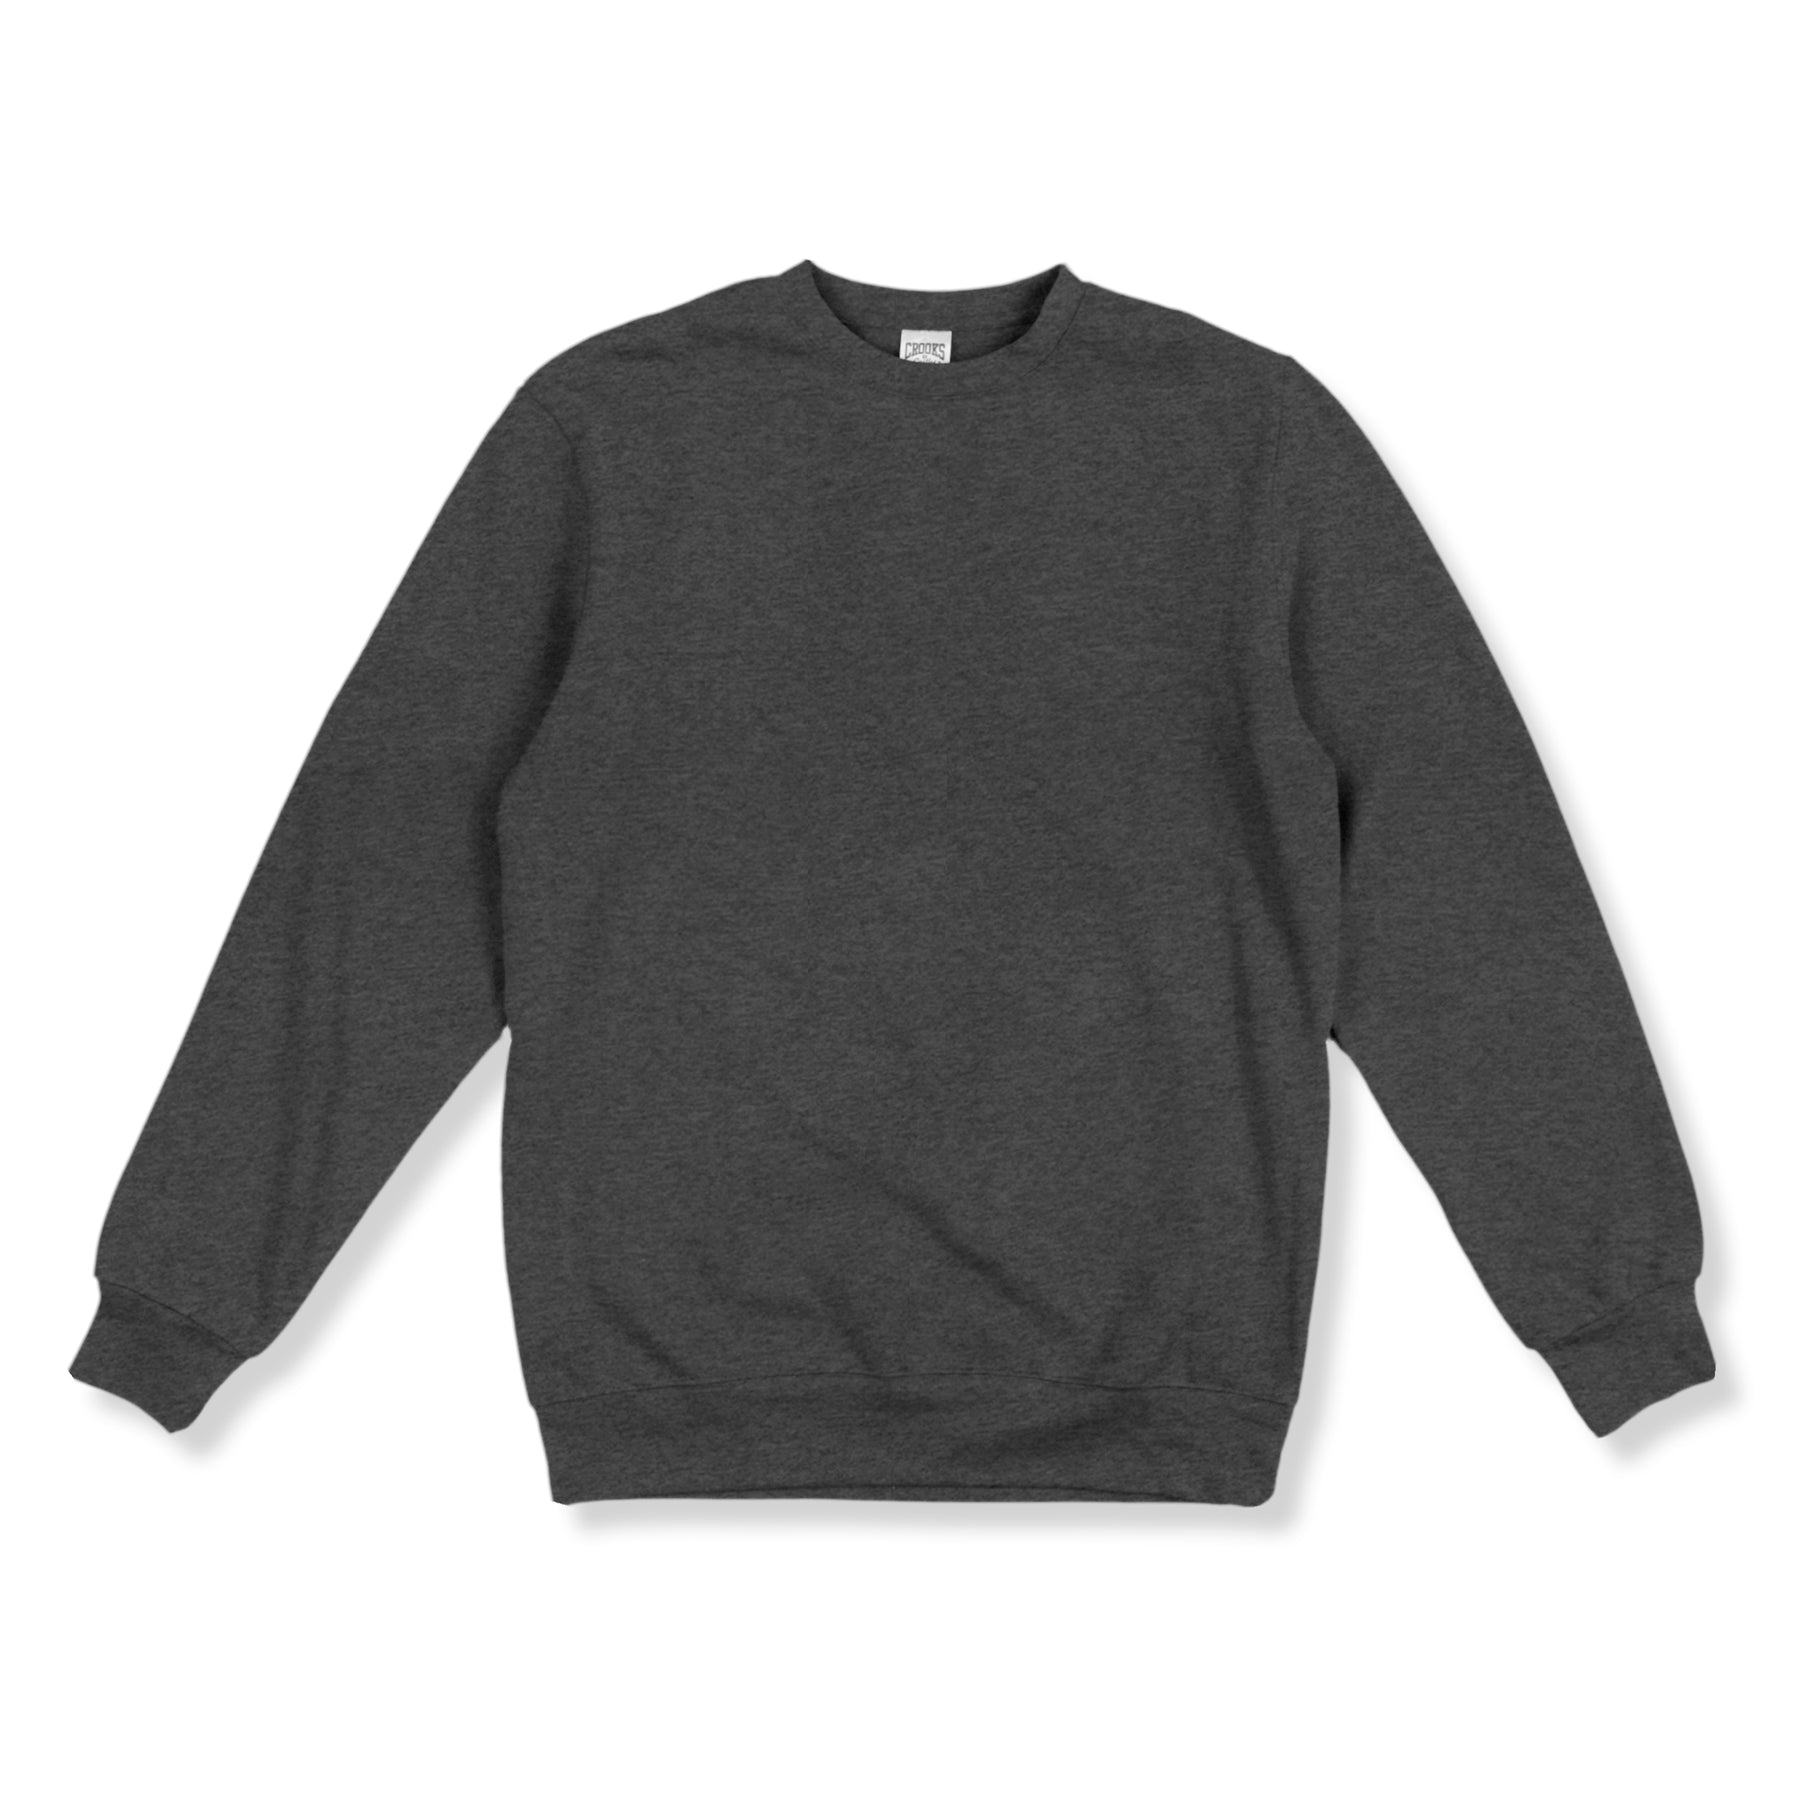 Essential Sweatshirt - Charcoal